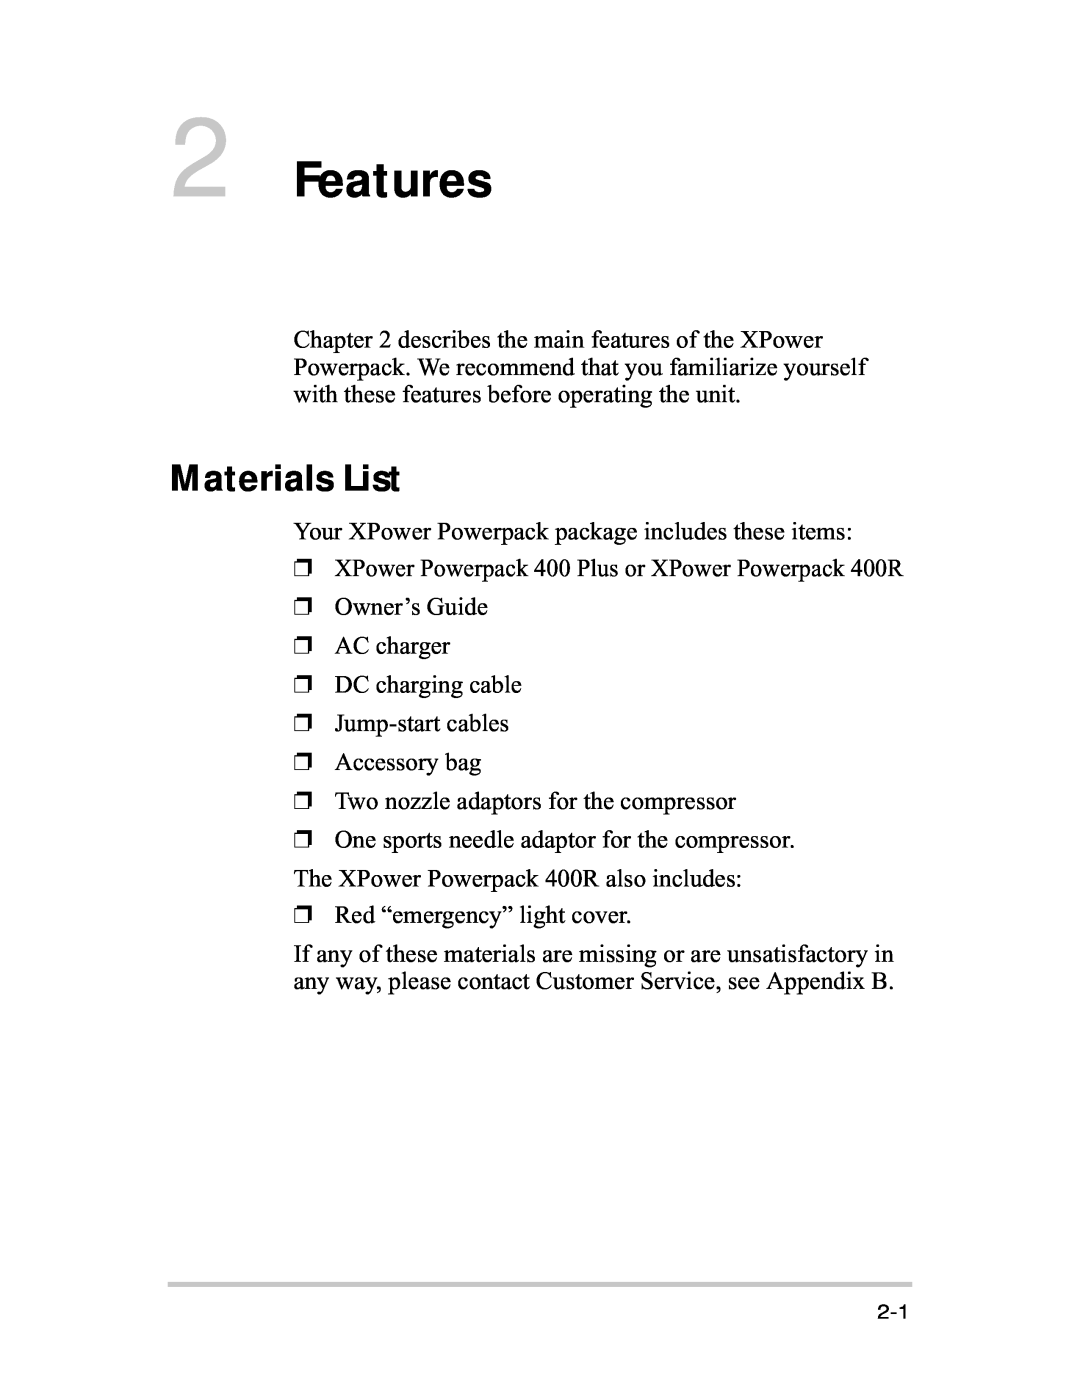 Xantrex Technology 400R manual Features, Materials List 